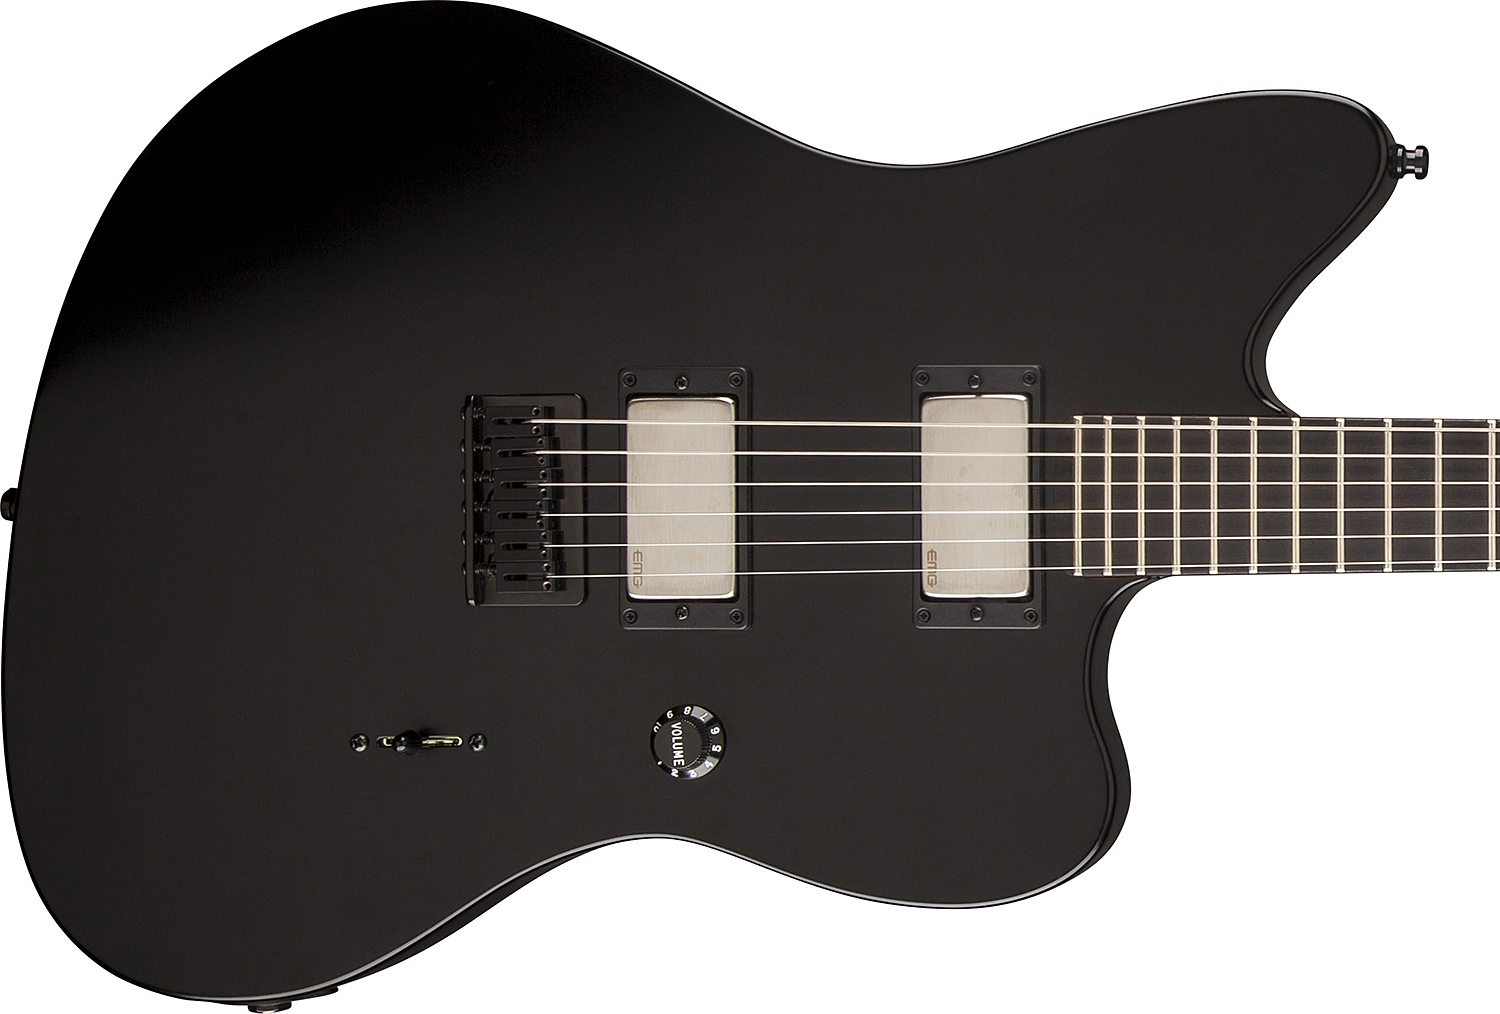 Fender Jim Root Jazzmaster Usa 2h Emg Ht Eb - Flat Black - Retro rock electric guitar - Variation 2